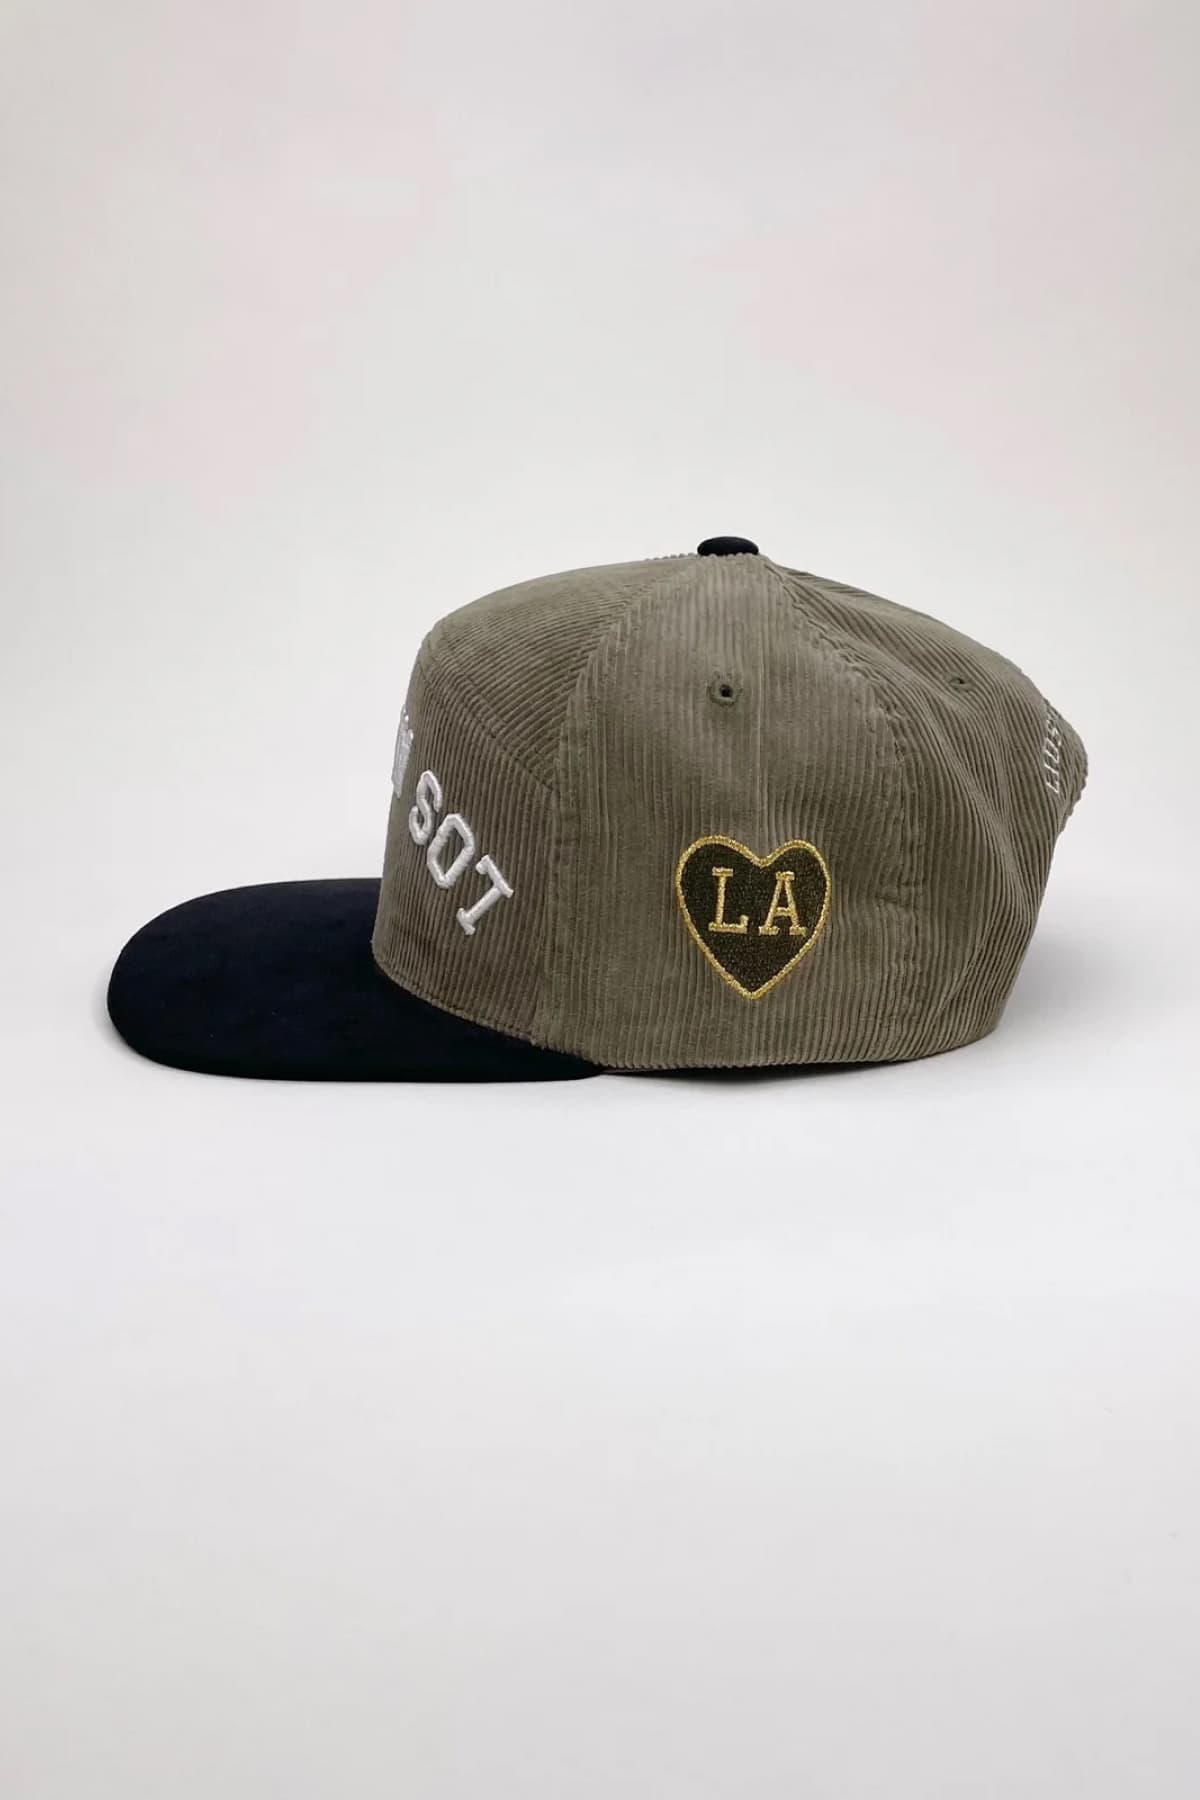 Los Angeles Rebel Corduroy Hat (Olive) - Hat